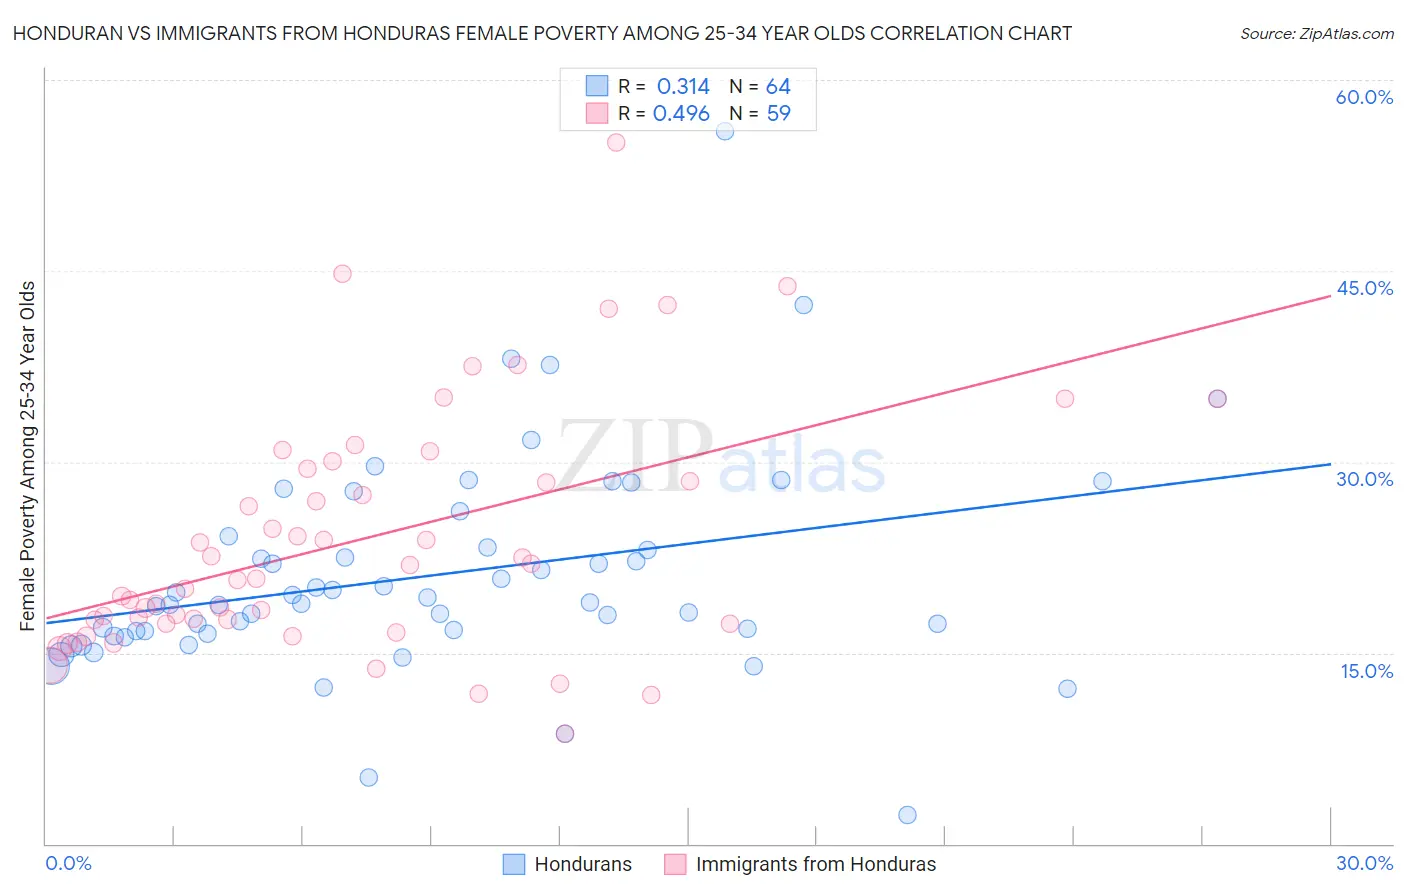 Honduran vs Immigrants from Honduras Female Poverty Among 25-34 Year Olds